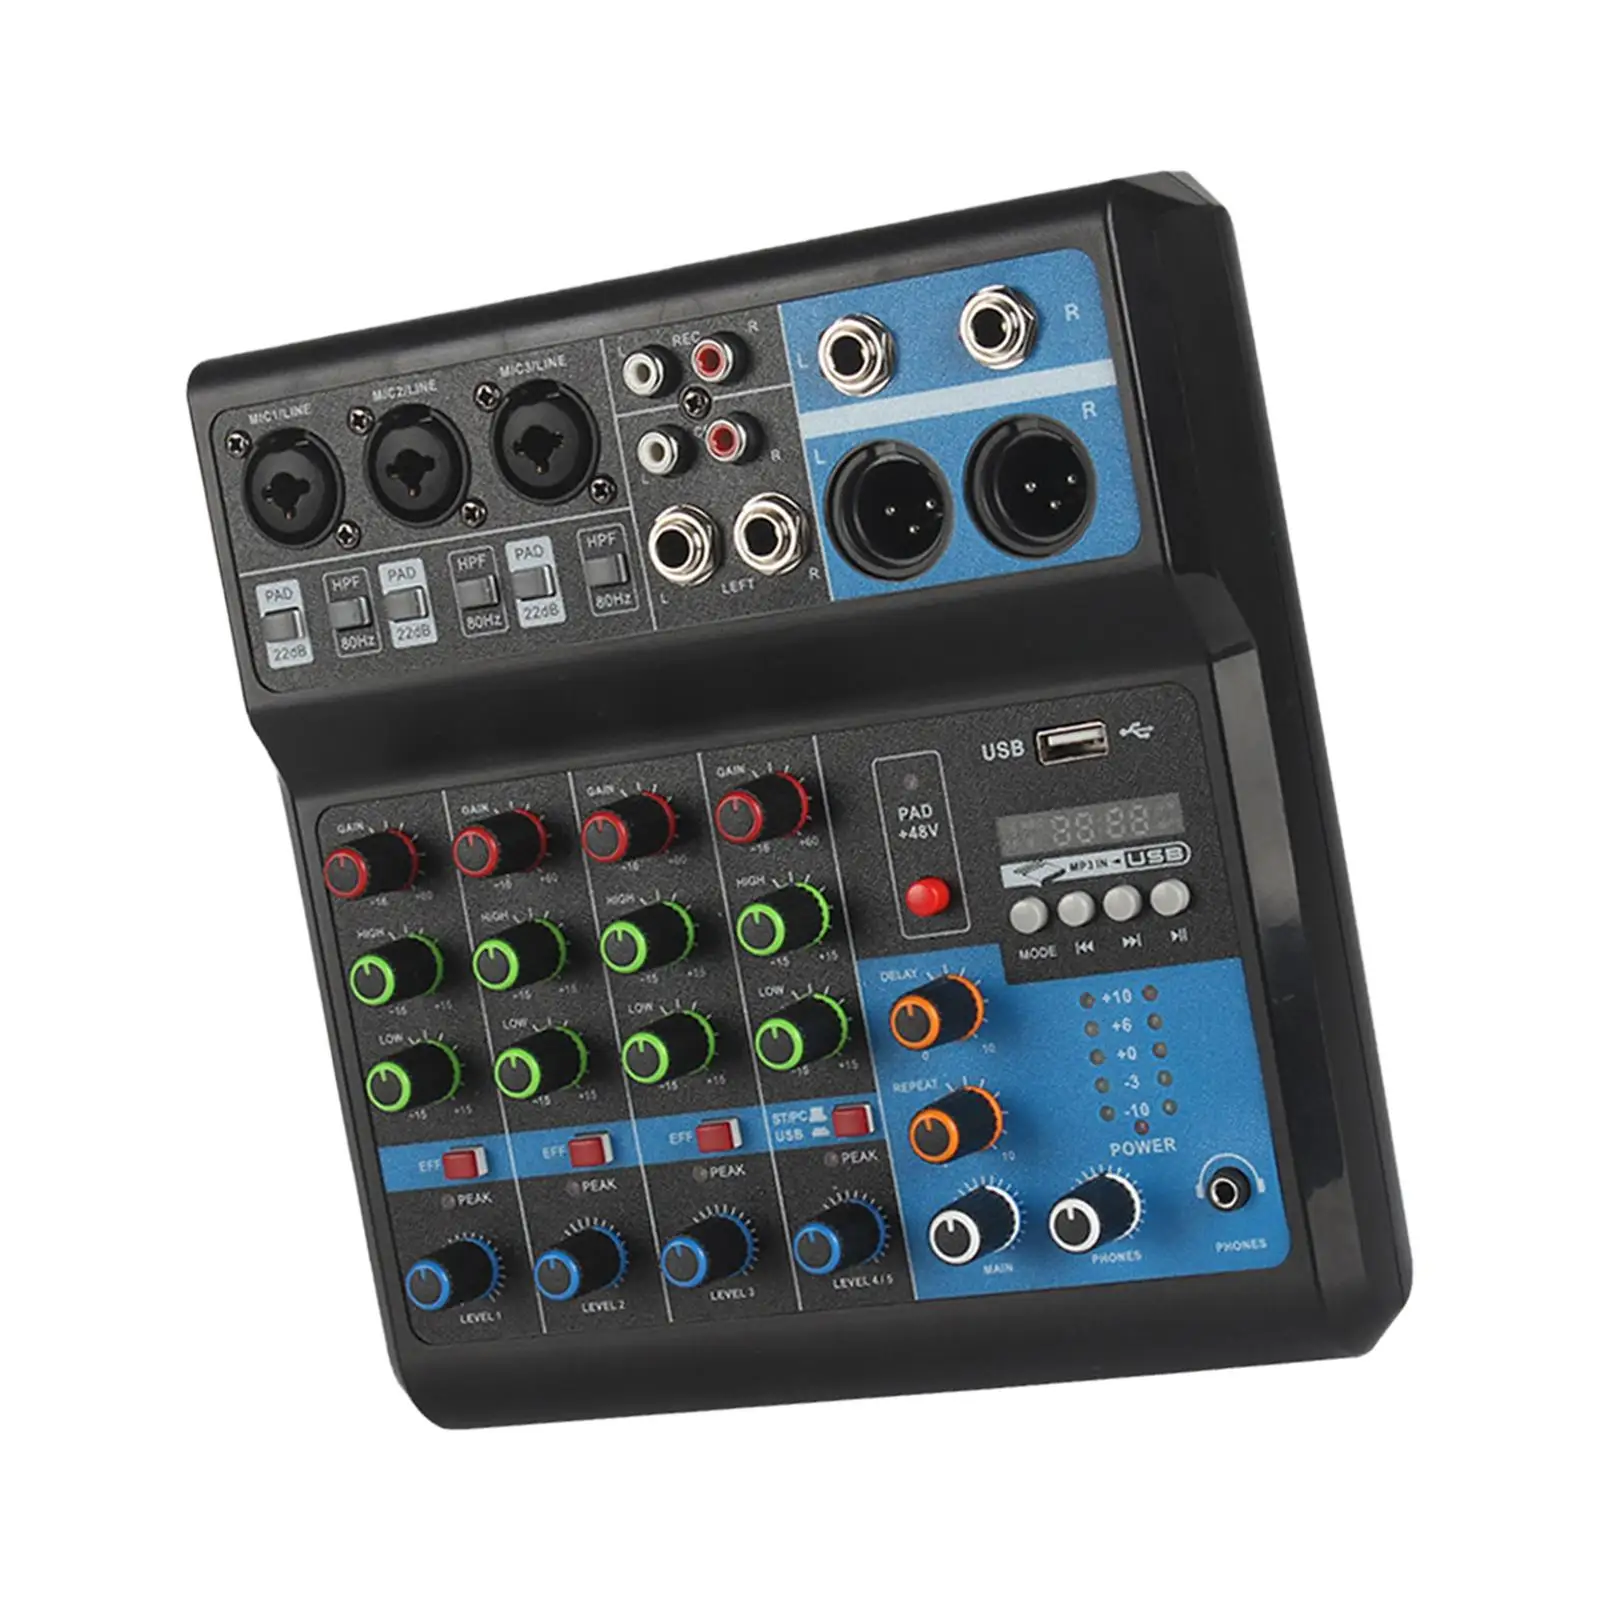 DJ Sound Mixer Mini Mixing Console Digital Mixer US Plug Size 20.5x21x6.5cm for Karaoke